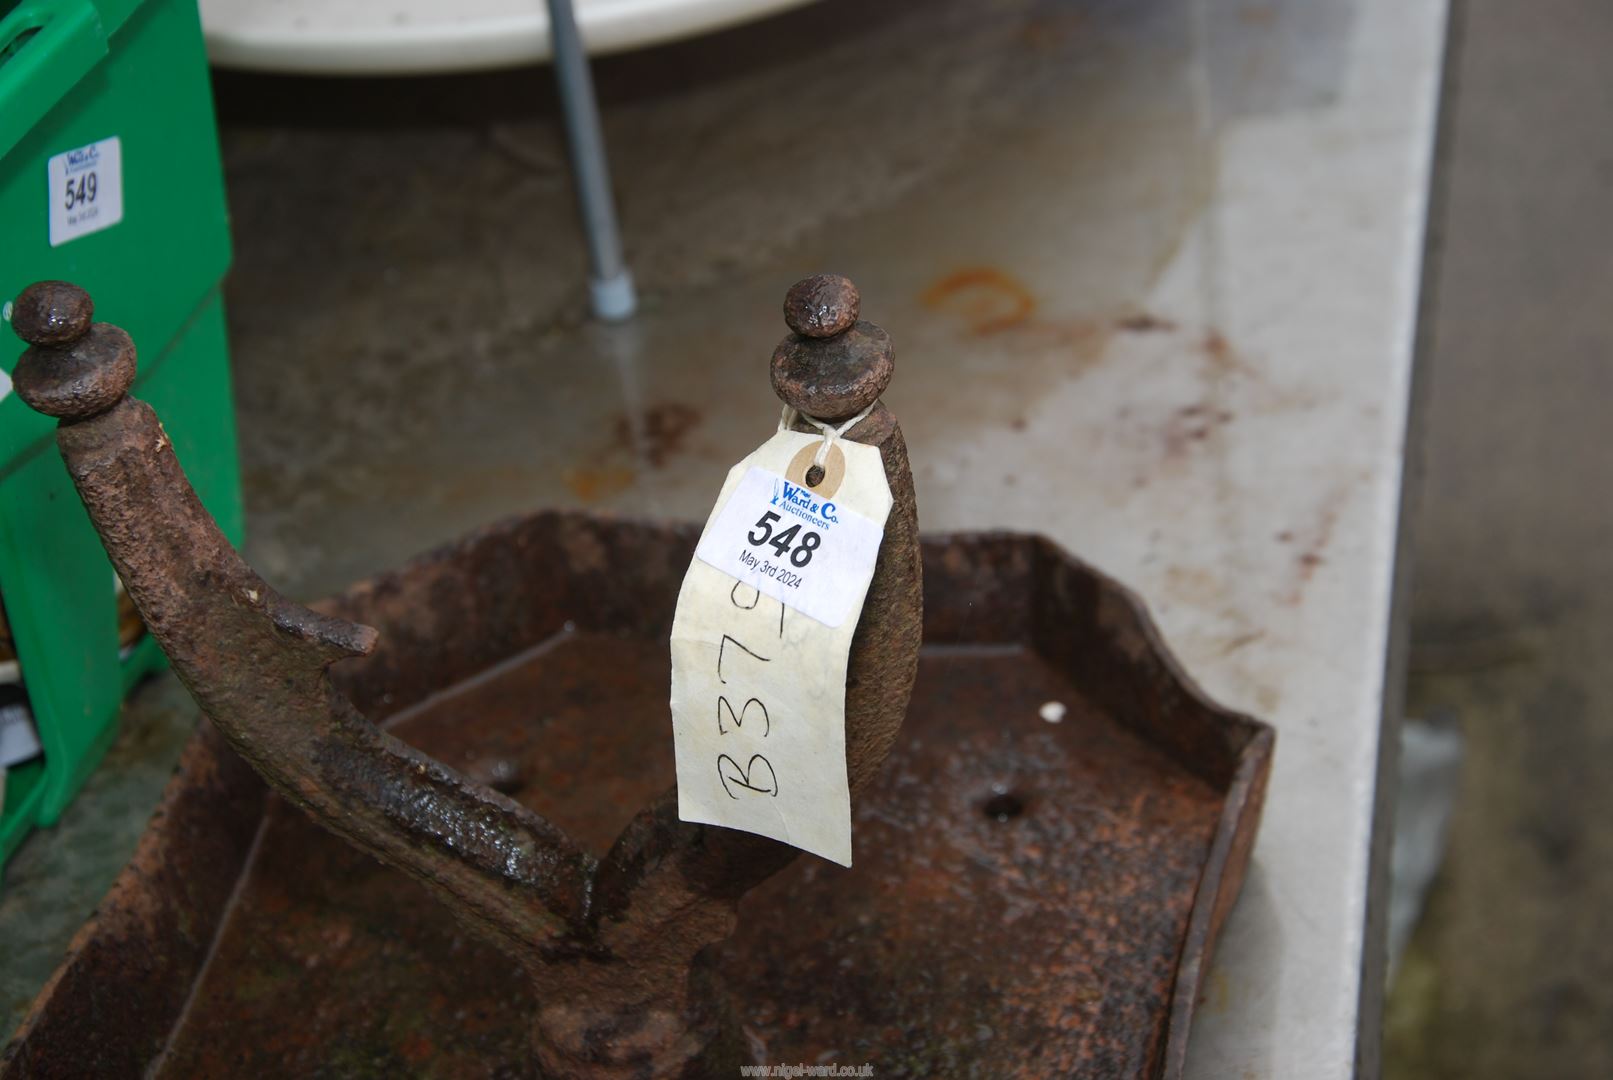 A cast iron boot scraper. - Image 2 of 2